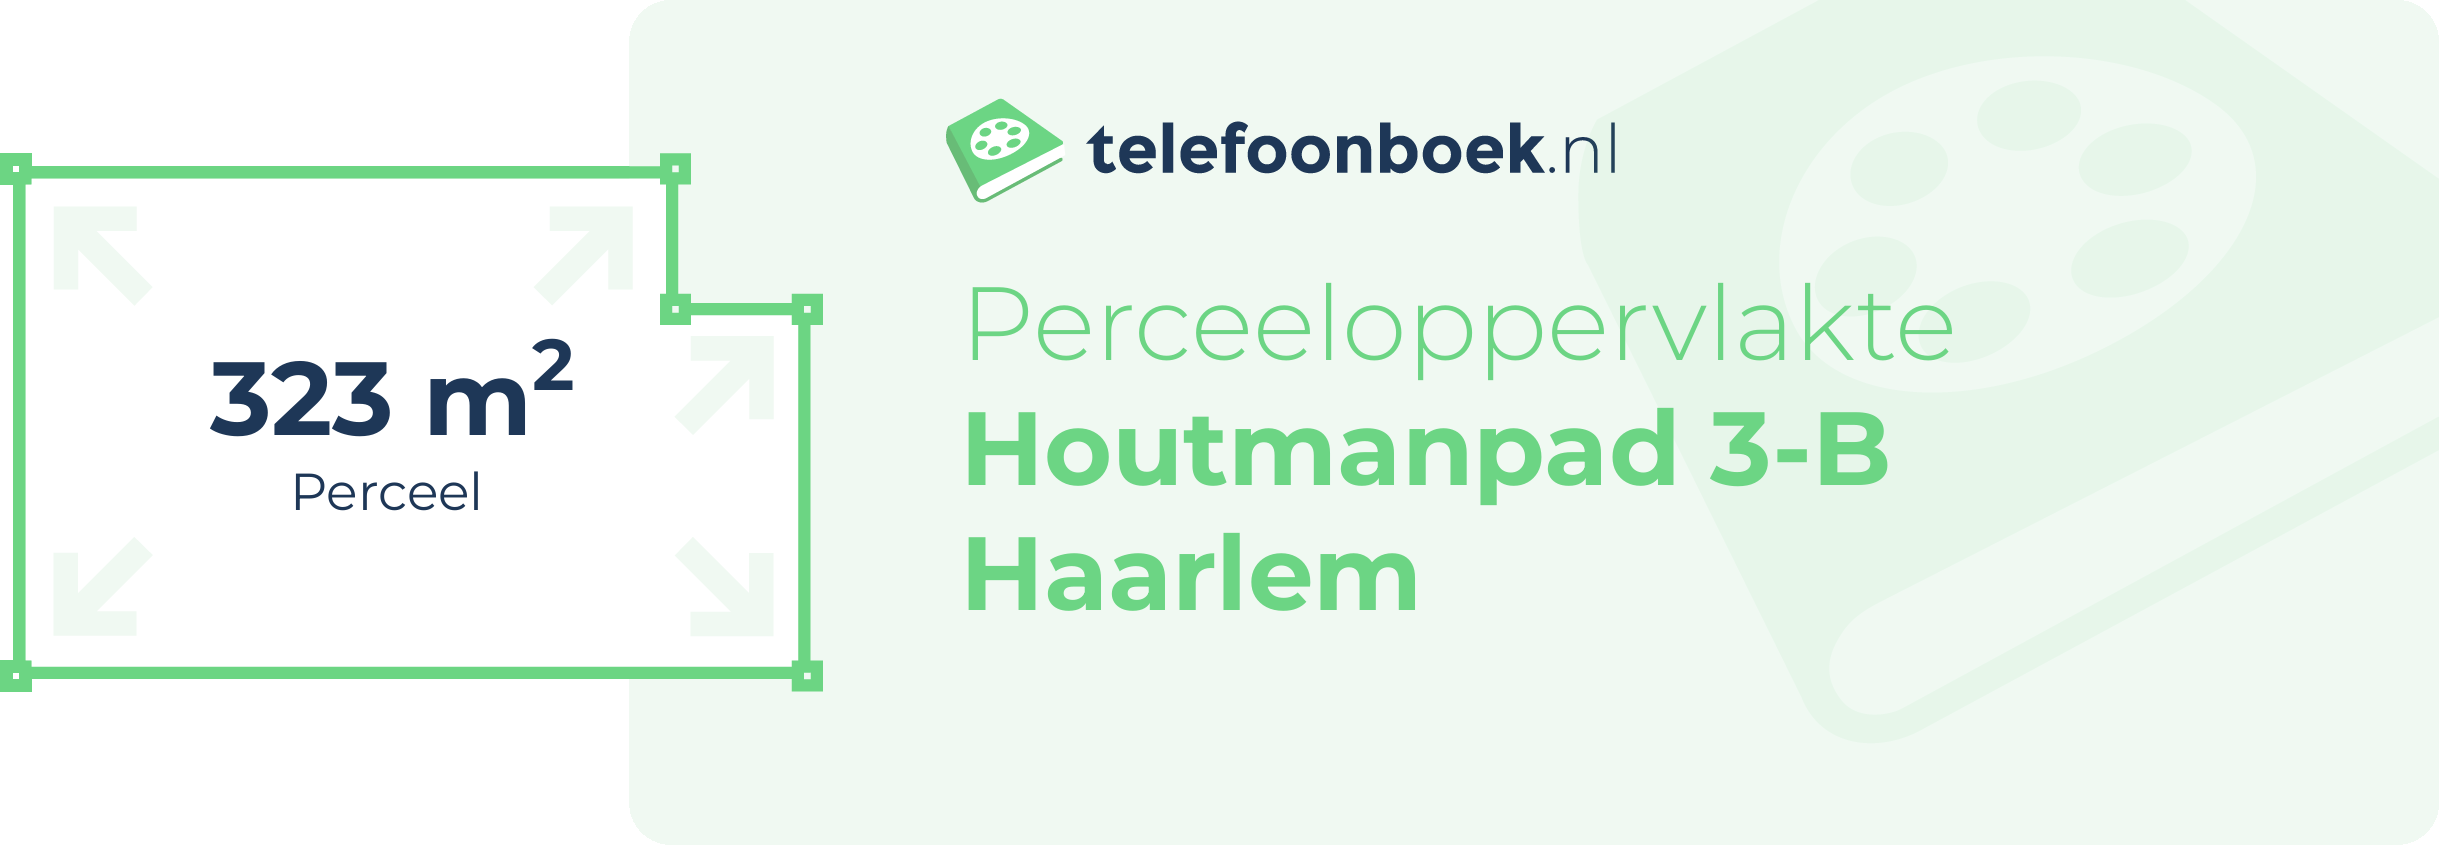 Perceeloppervlakte Houtmanpad 3-B Haarlem